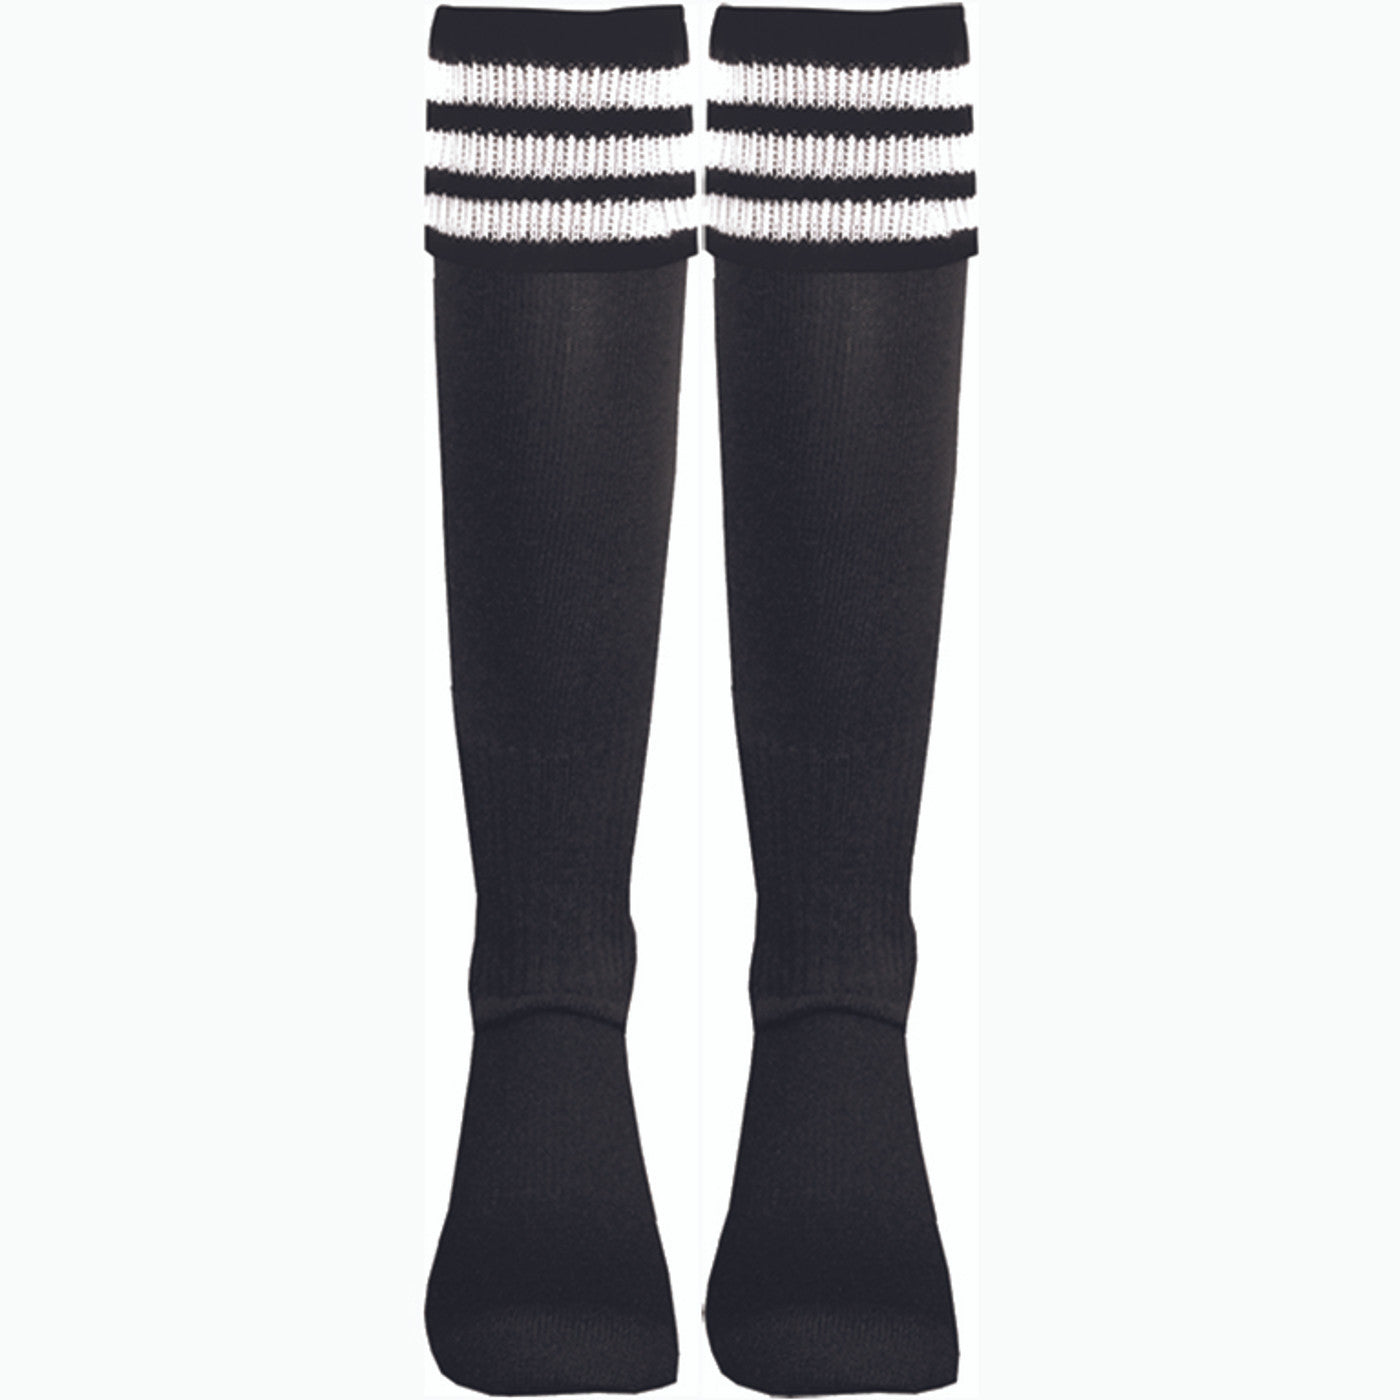 OSi Pro 3 Stripe Socks - Youth Sports Products